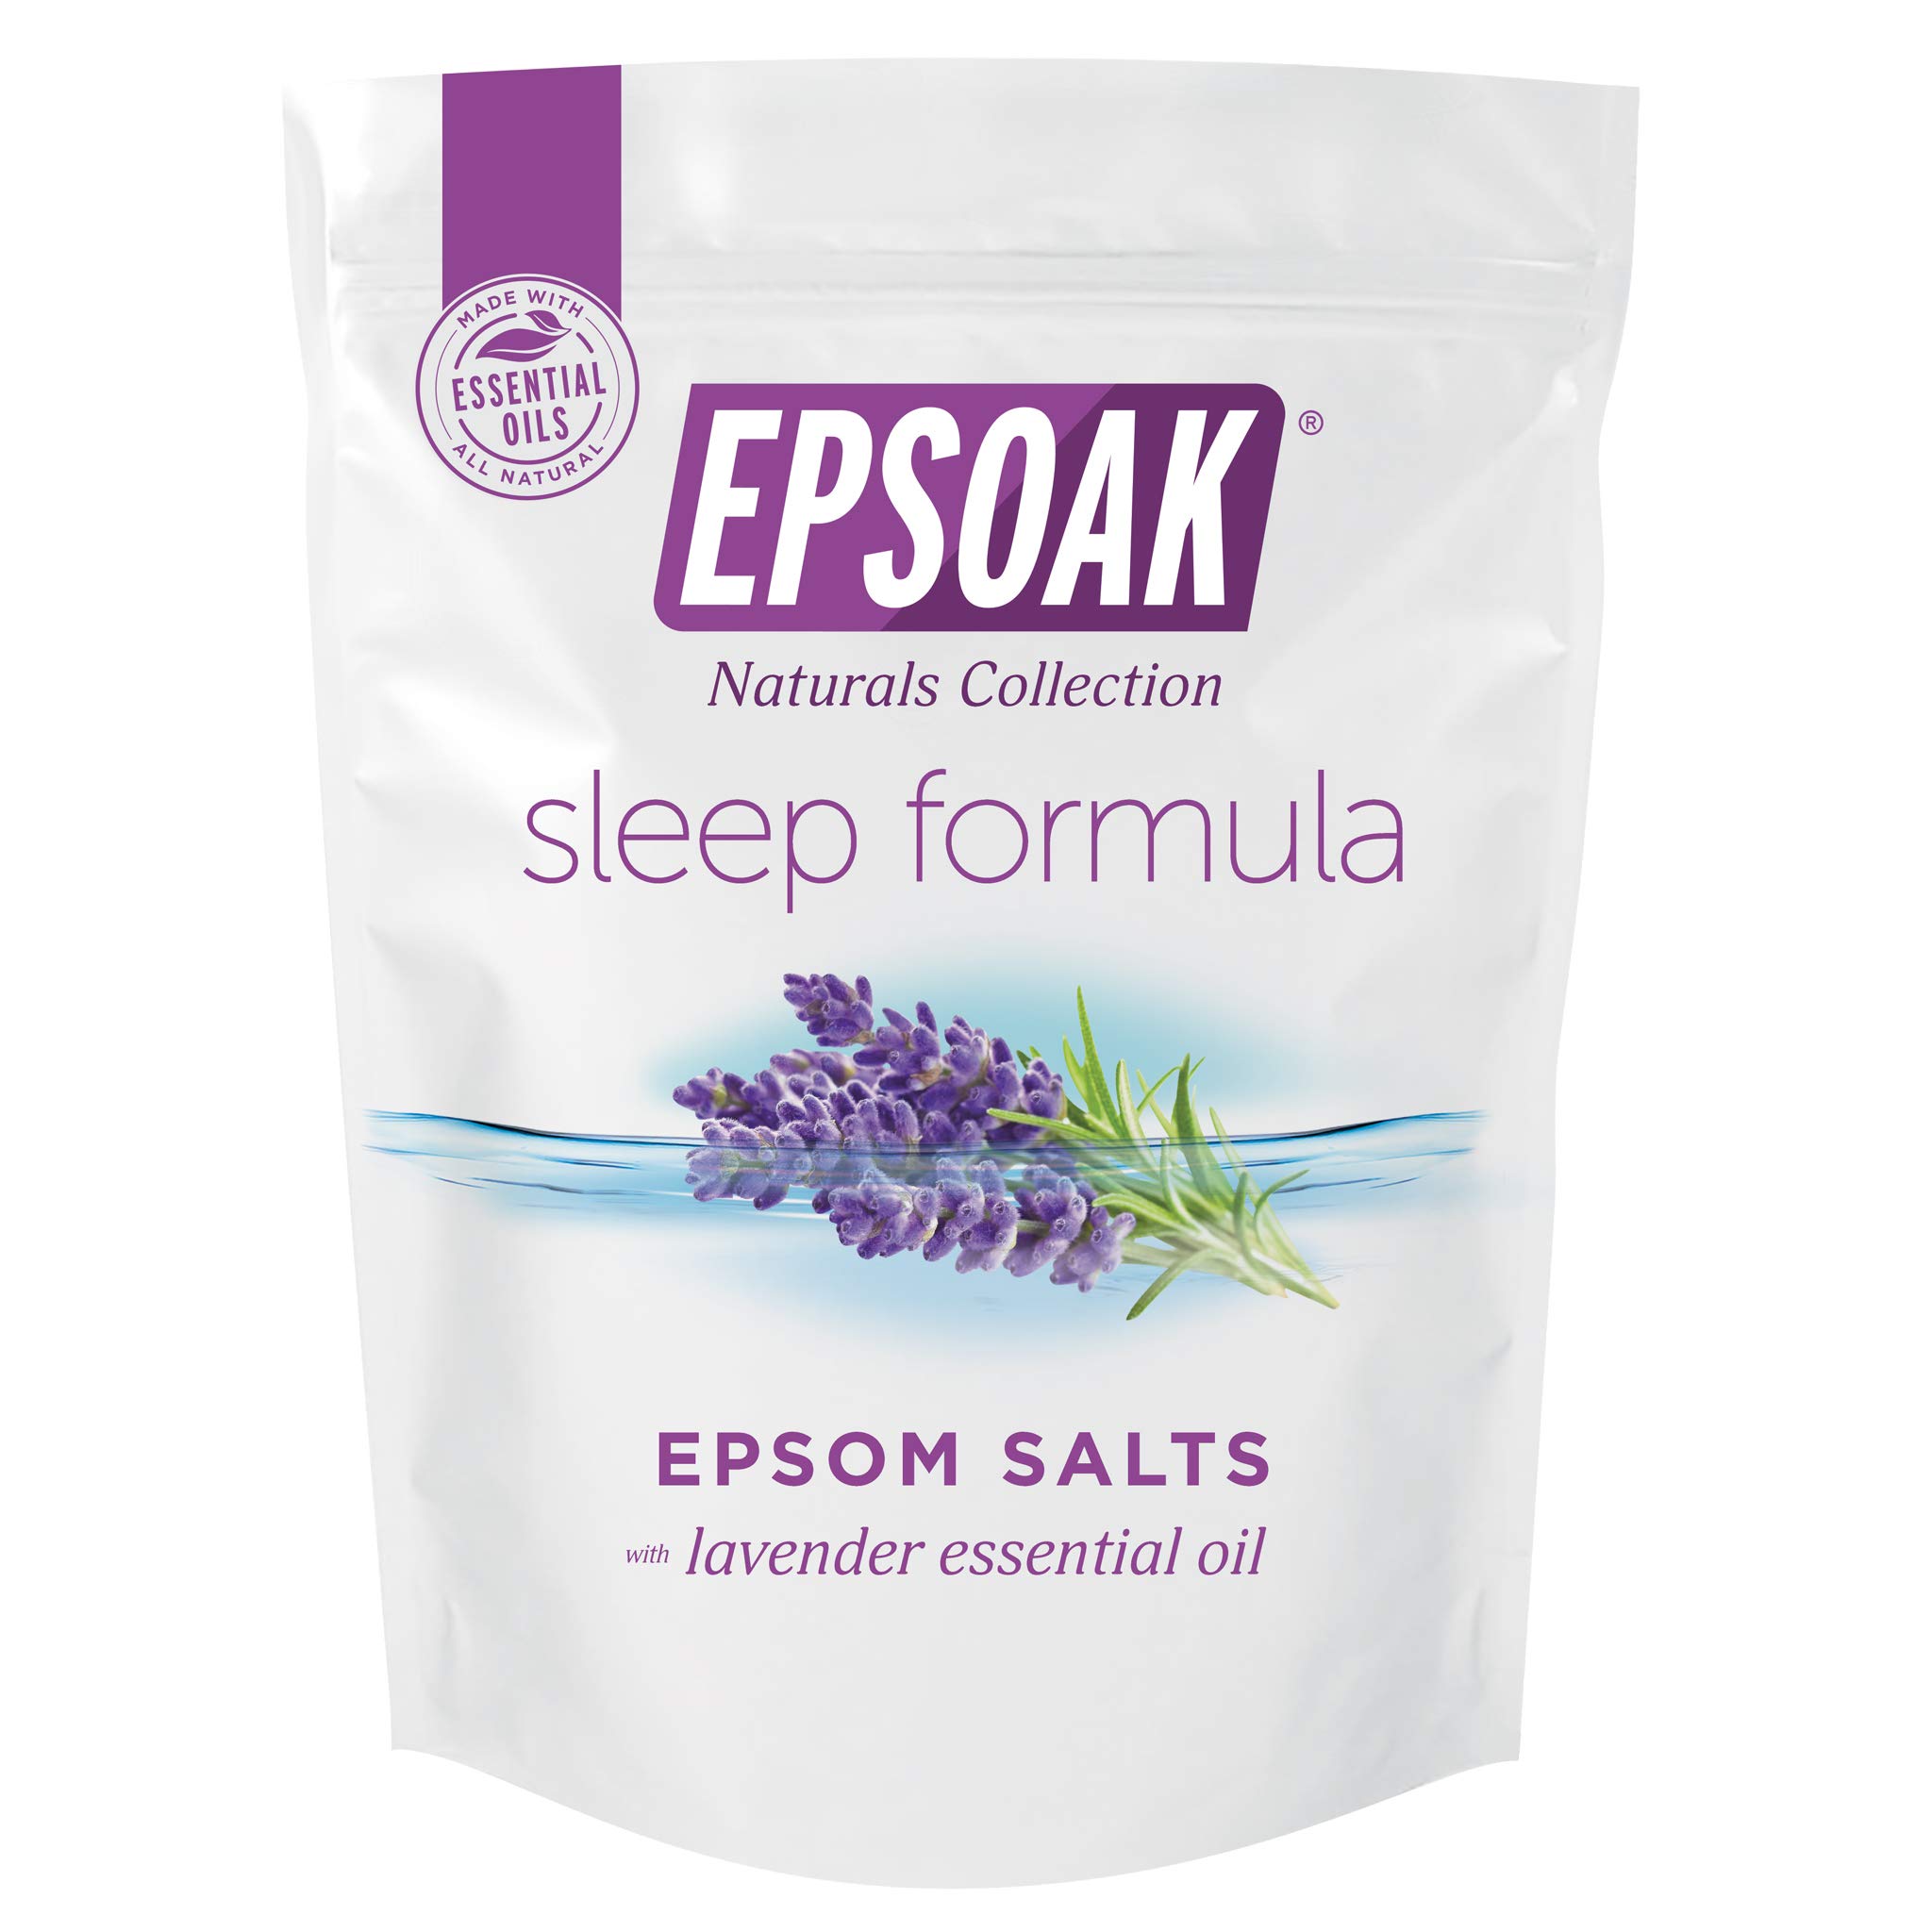 Epsoak Epsom Salt Ultimate Bath Soak Bundle (6 lbs. Total) – Sleep Formula Bath Salt, Muscle Soak Bath Salt, Original Unscented Epsom Salts